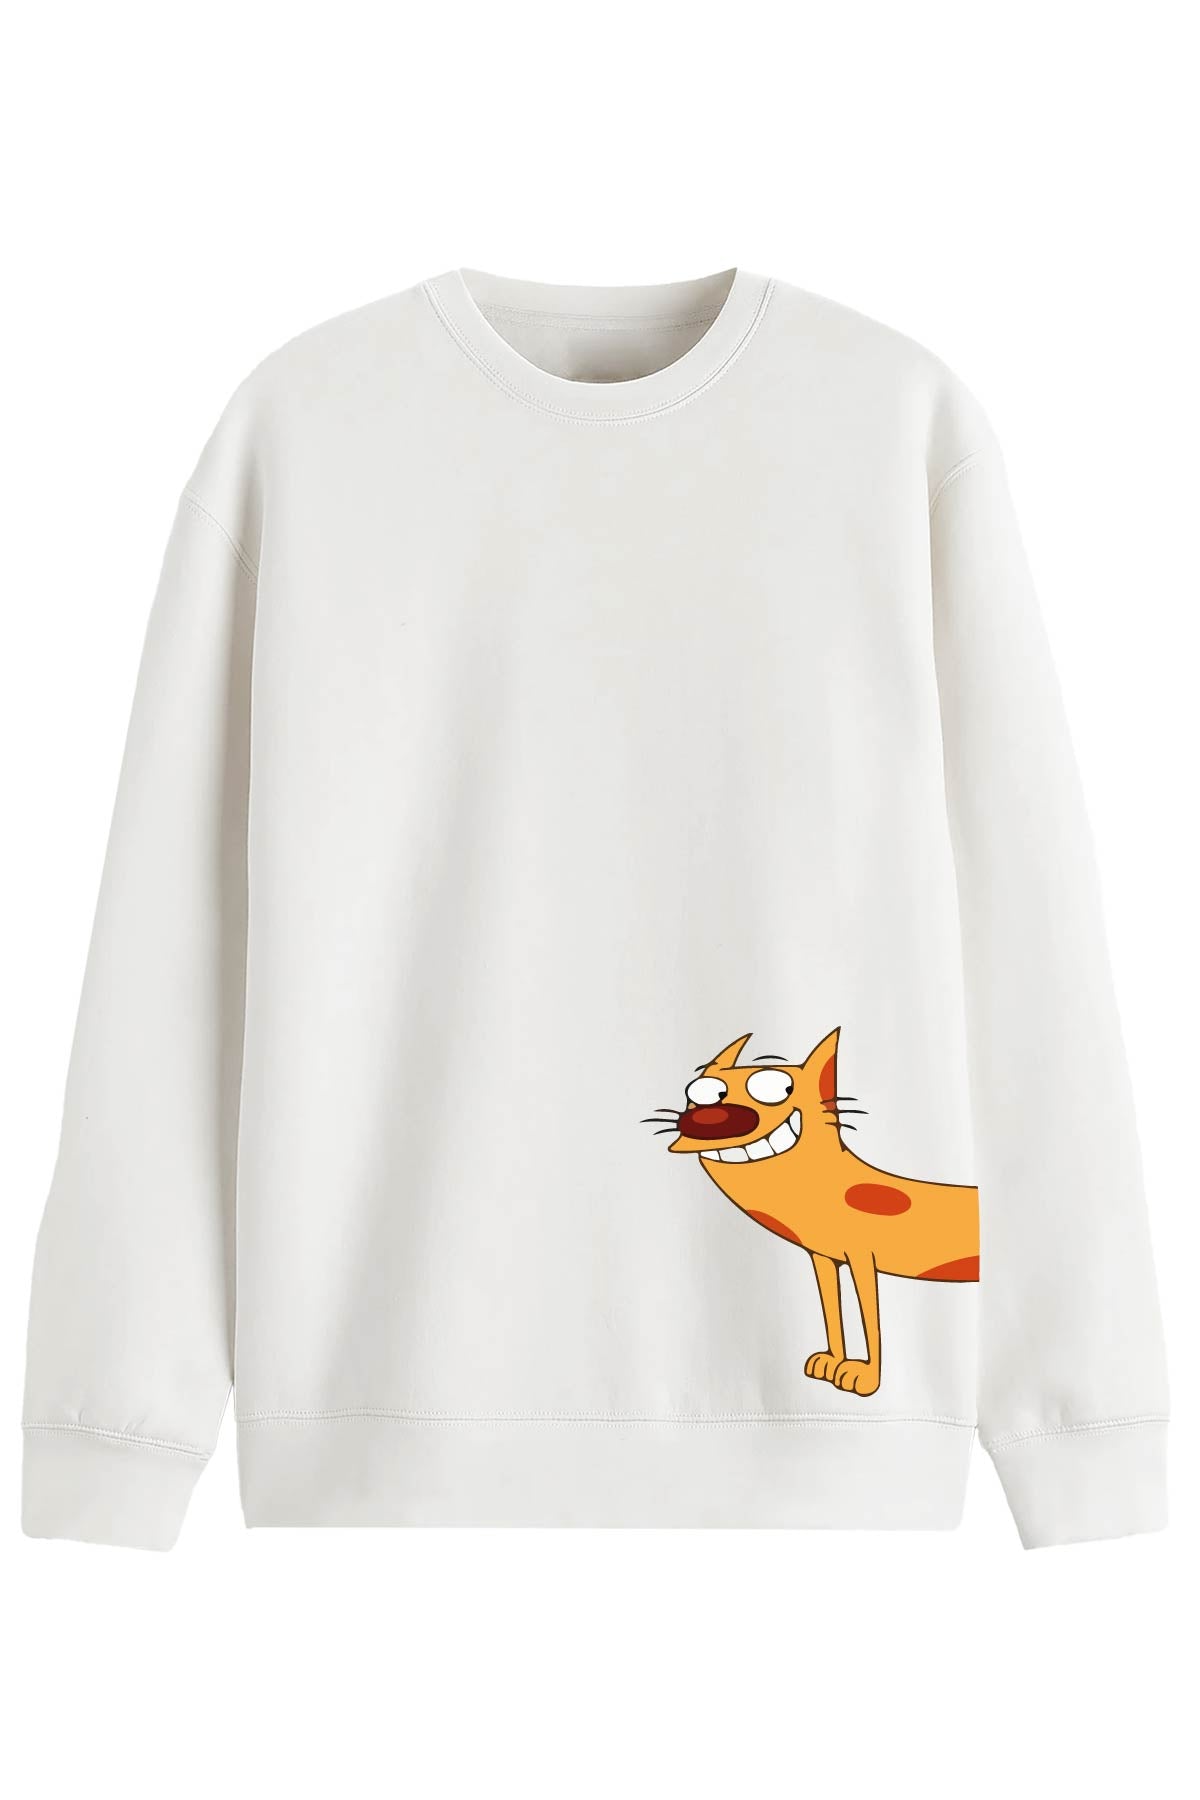 CatDog / Cat - Sweatshirt